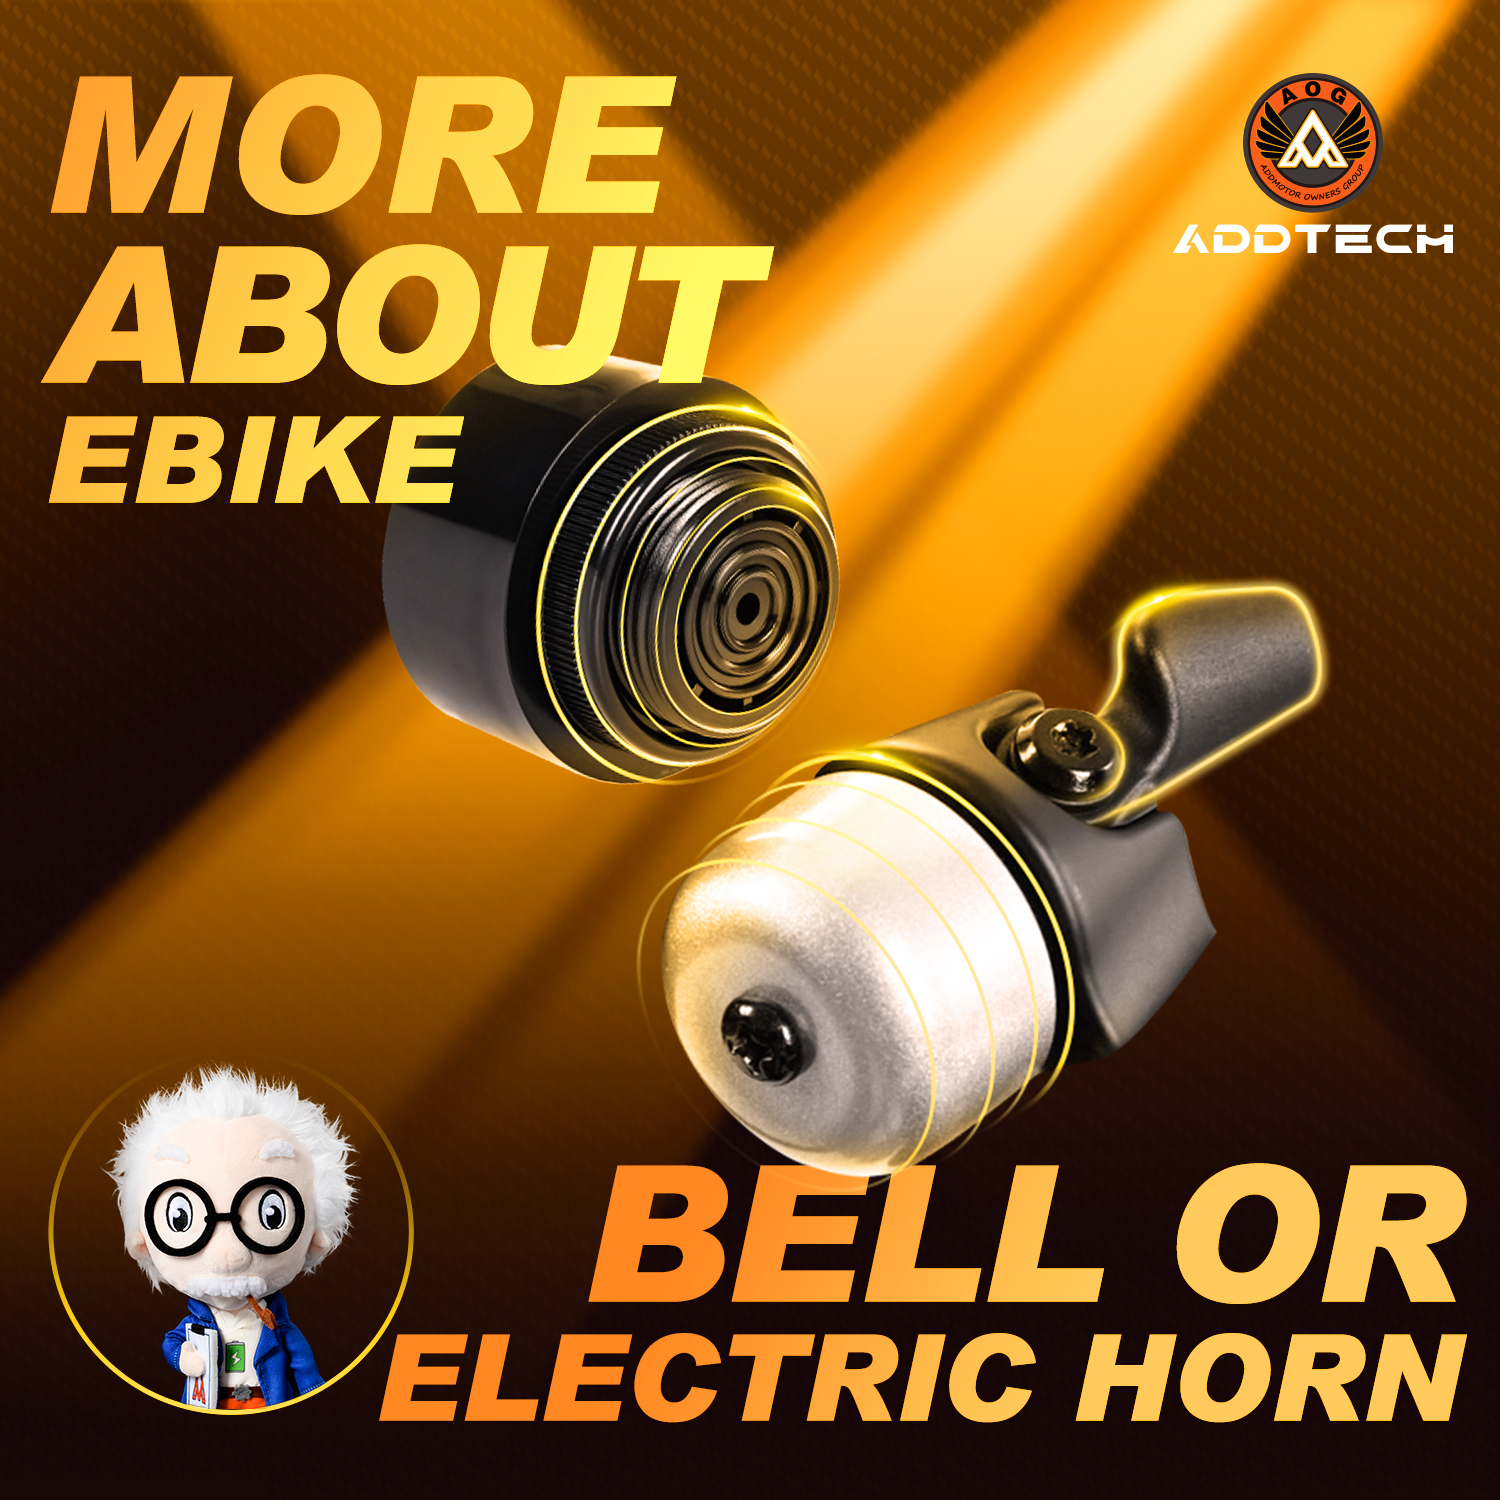 ADDTECH | Electric Bike Mechanical Components - Bike Bell or Electric Horn